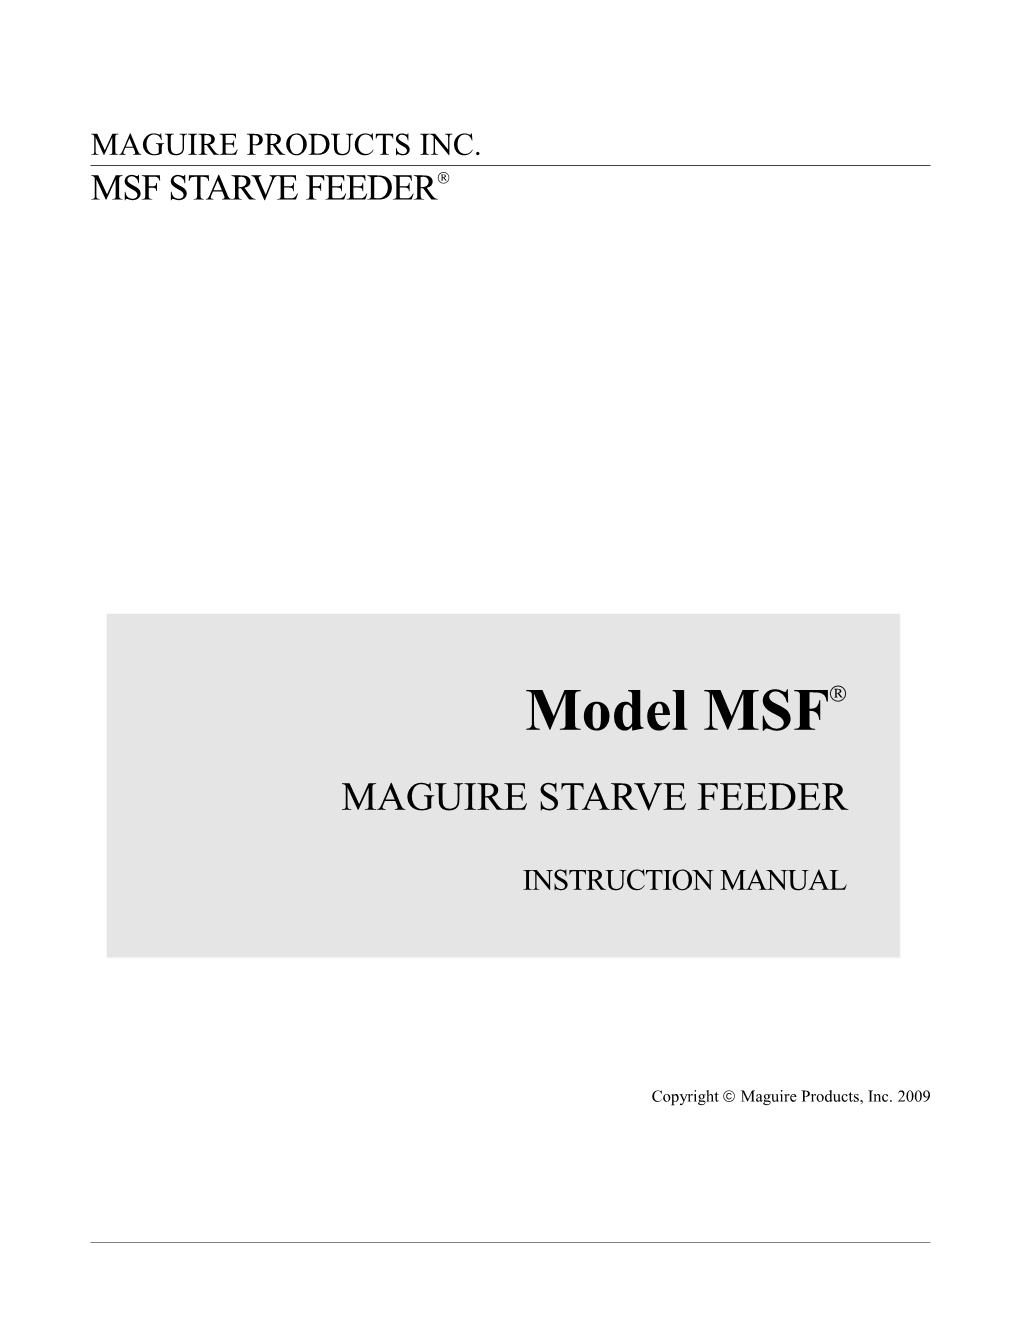 Model MSF STARVE FEEDER